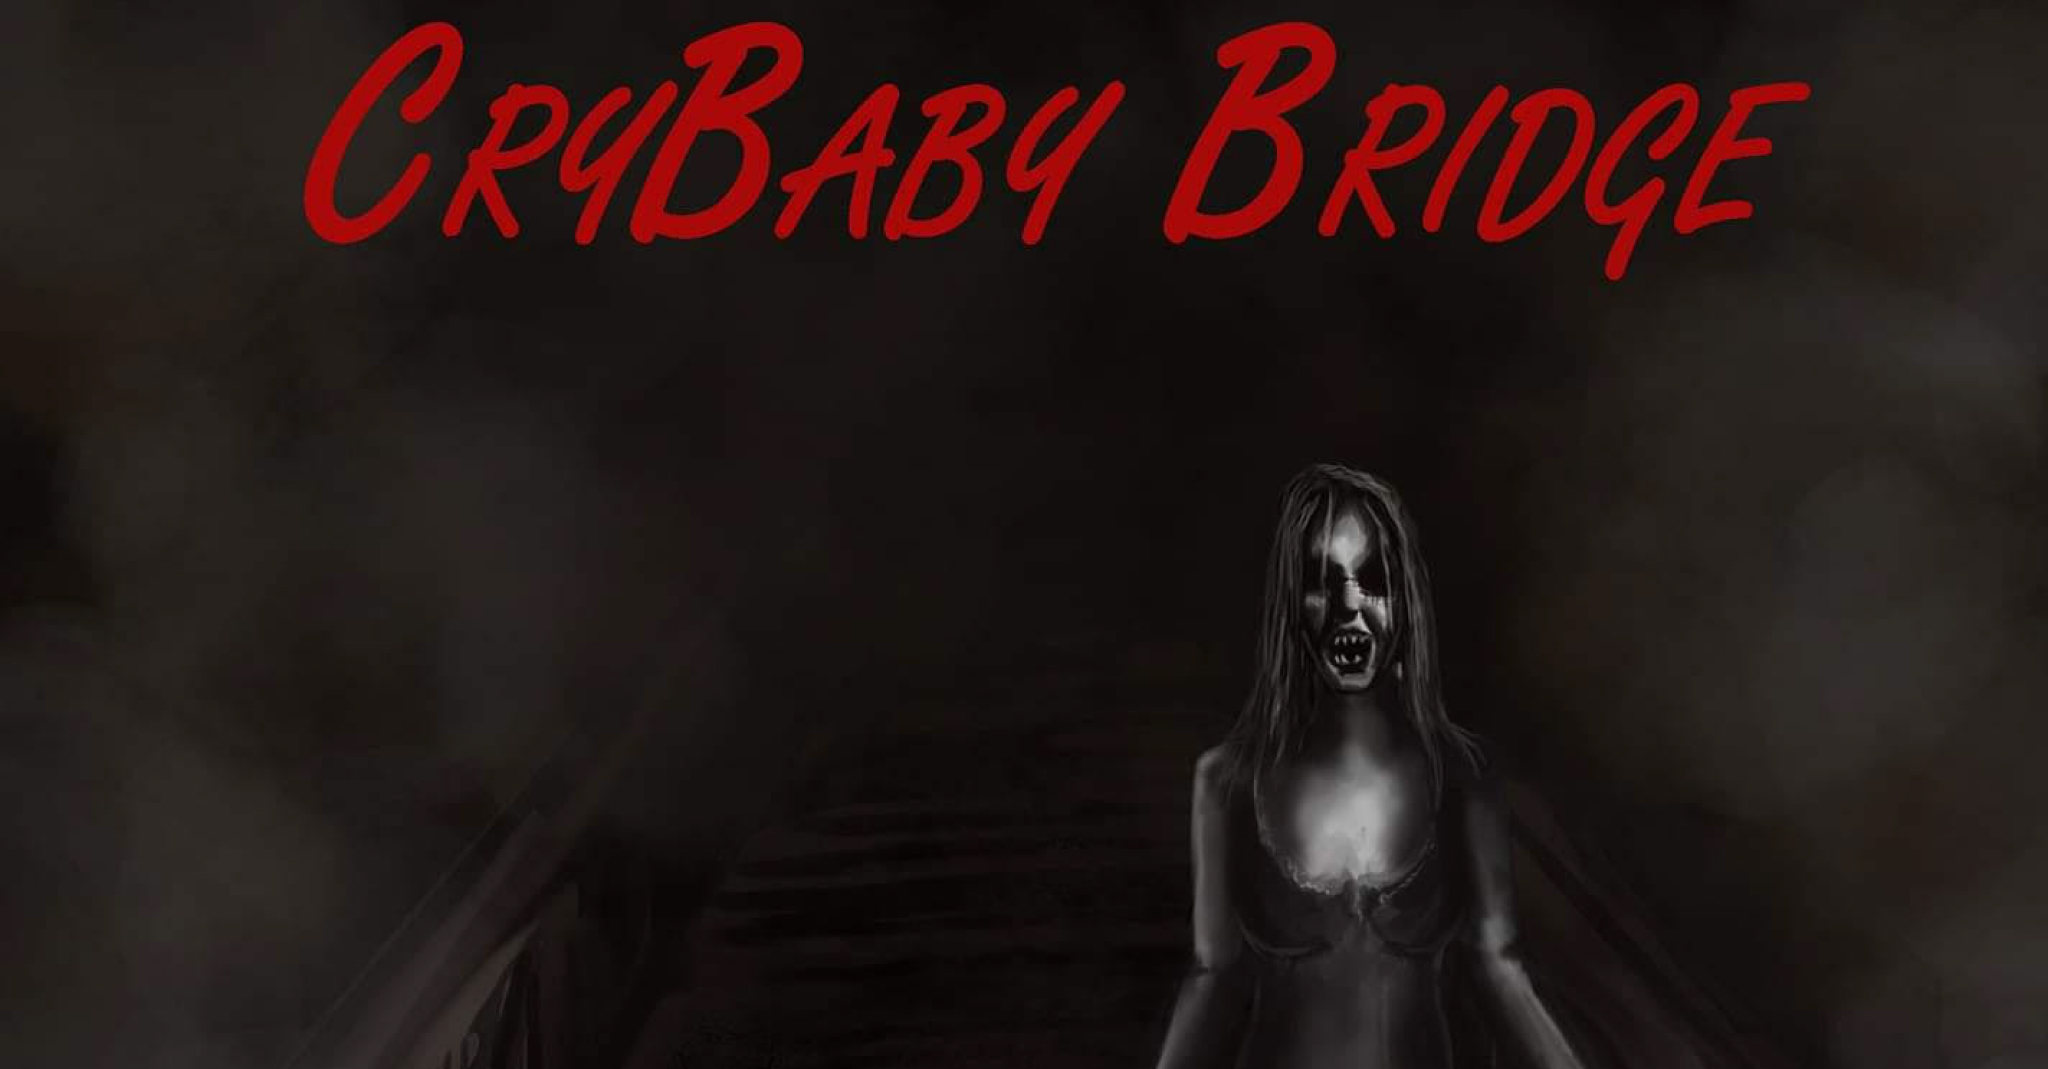 Poster of Crybaby bridge with creepy lady